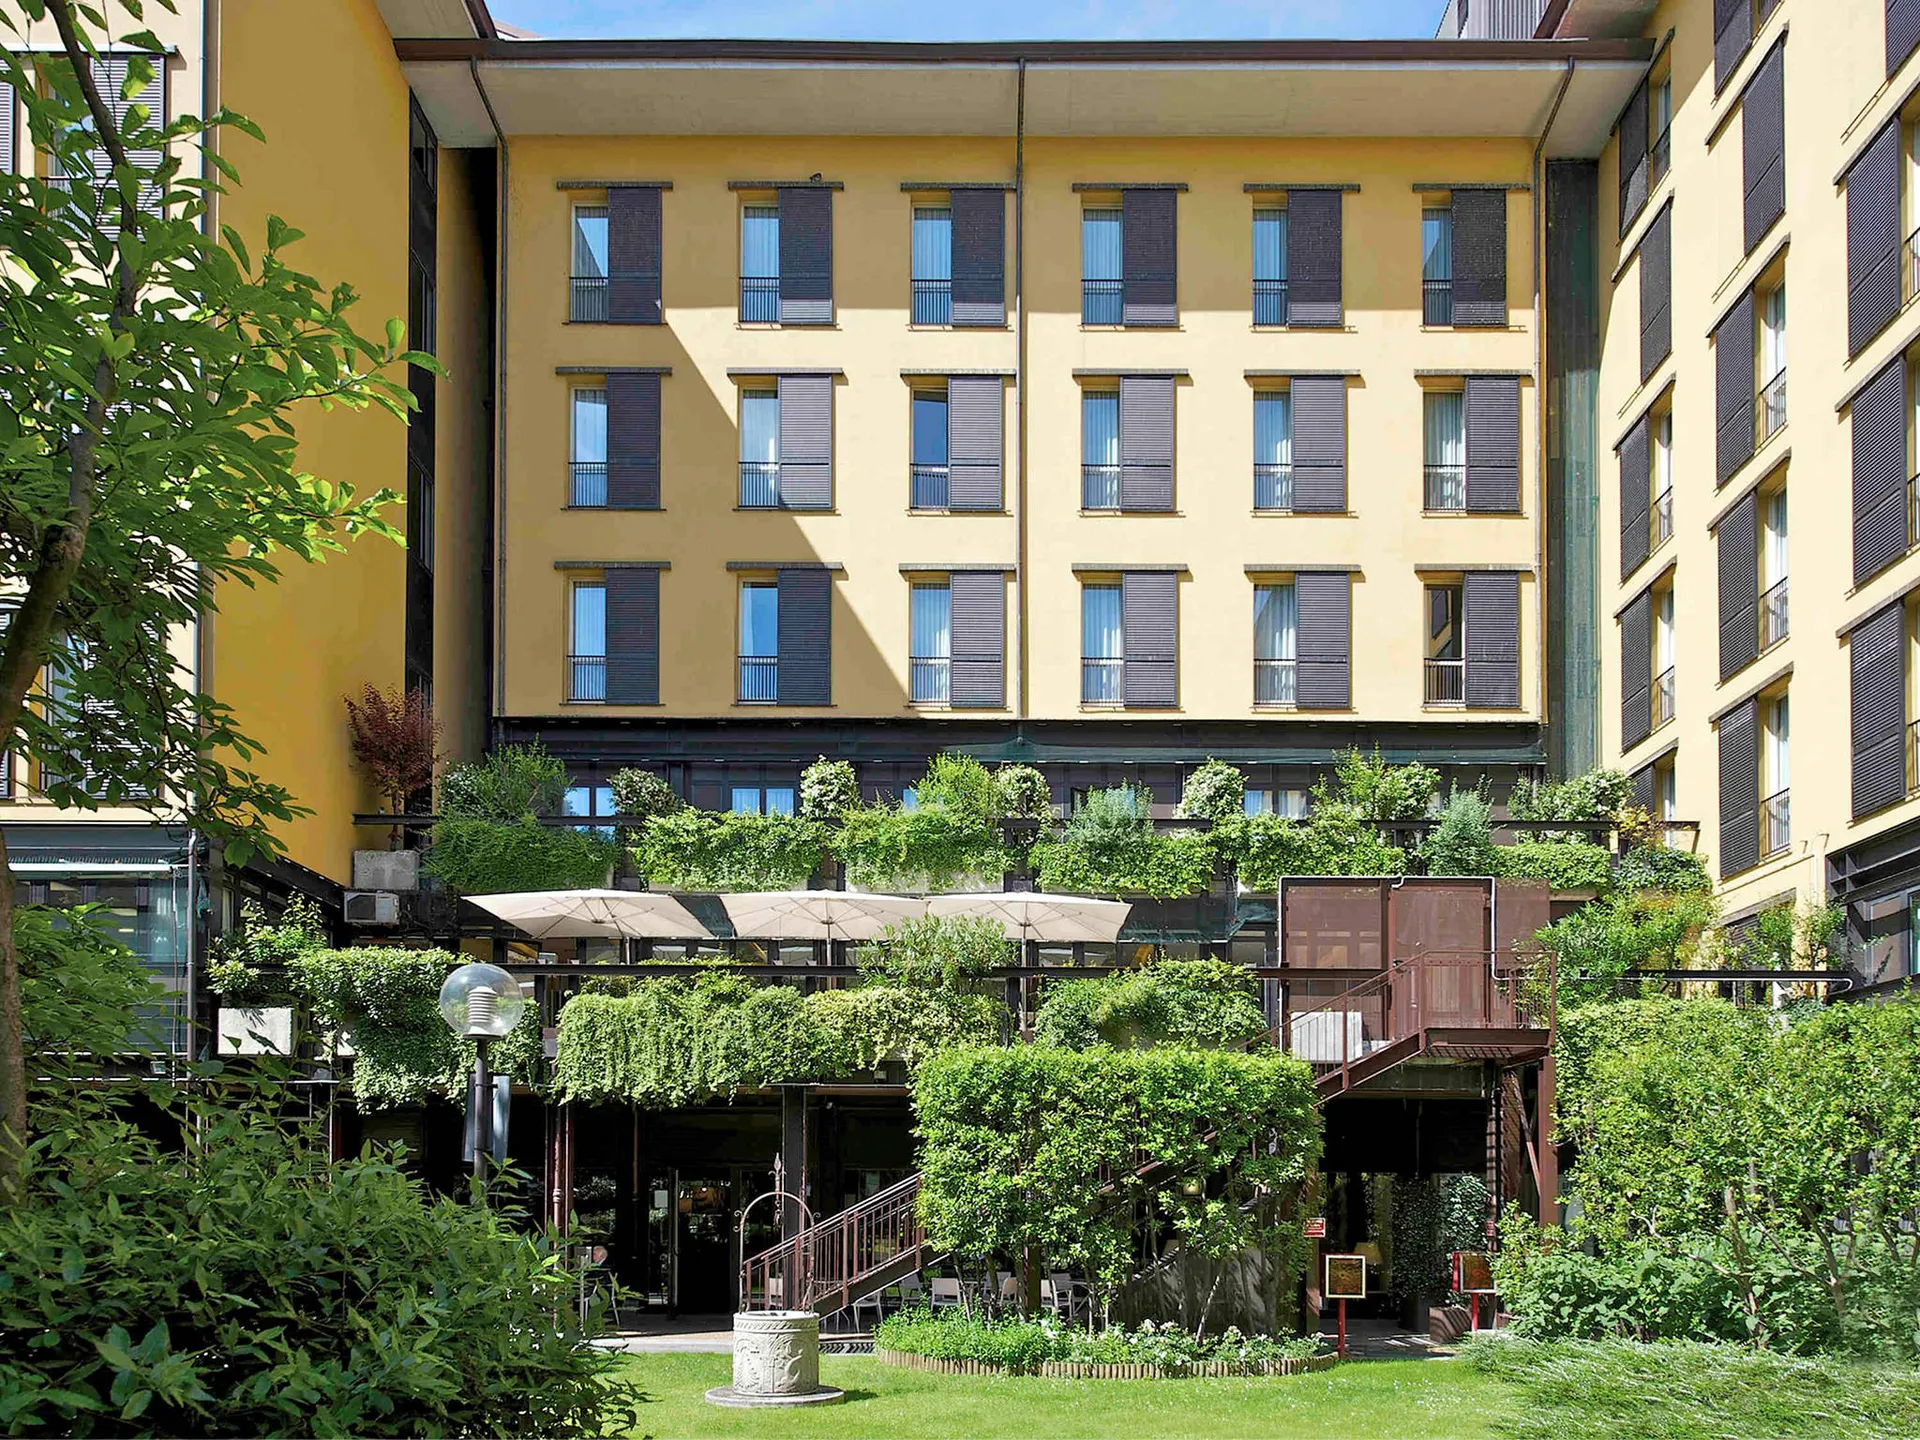 Online bestellen: Hotel Mercure Bologna Centro